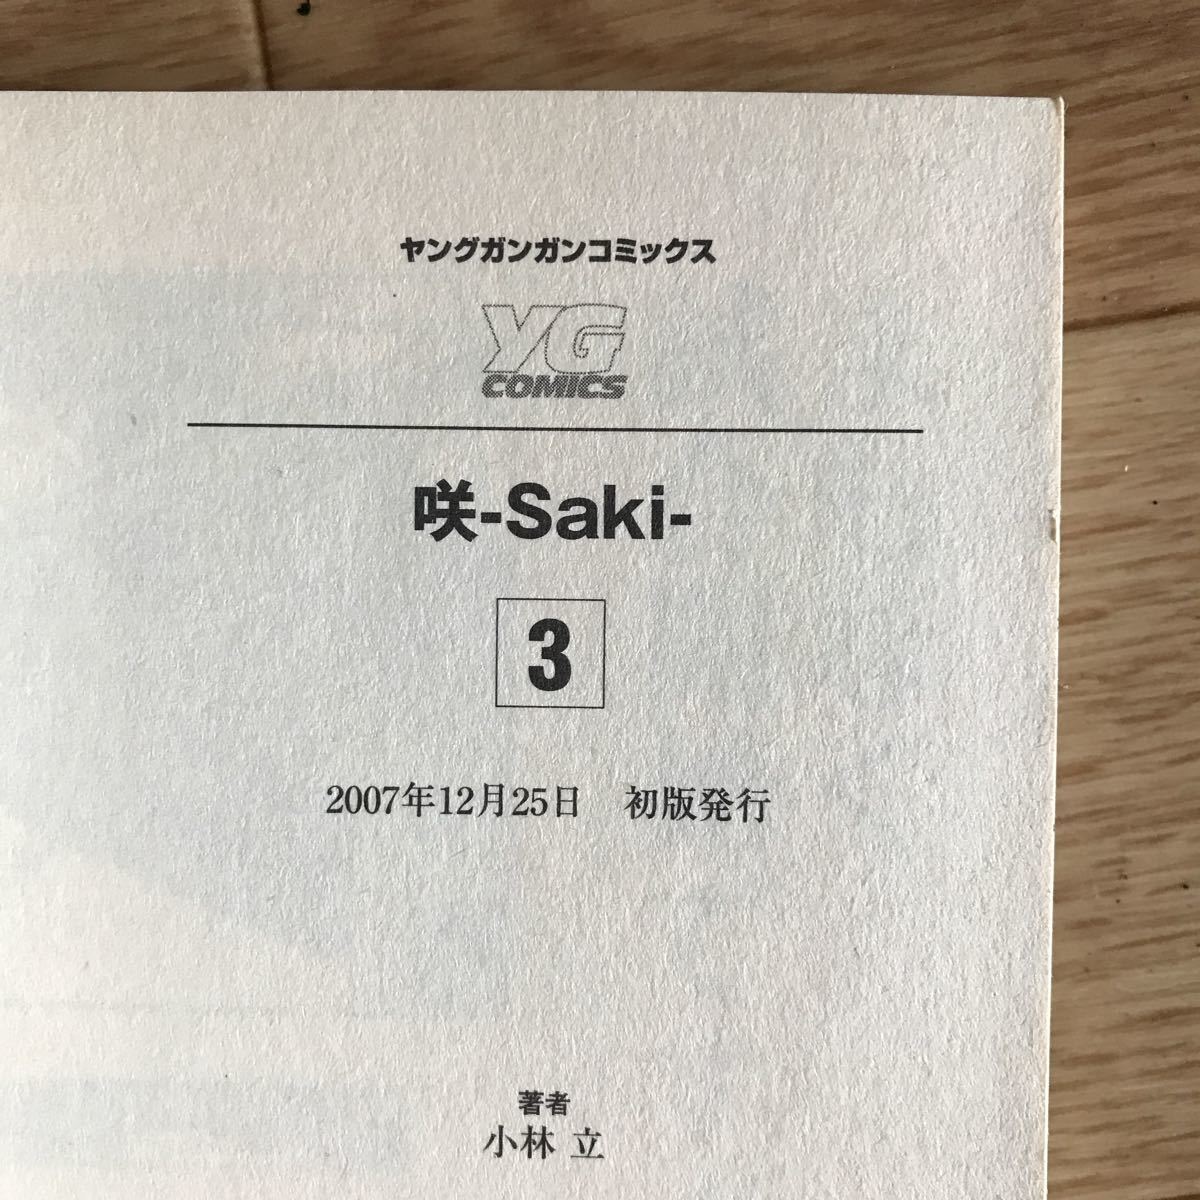 .-Saki- 3 volume Young gun gun comics Kobayashi . mah-jong mahjong heaven ..0106-2